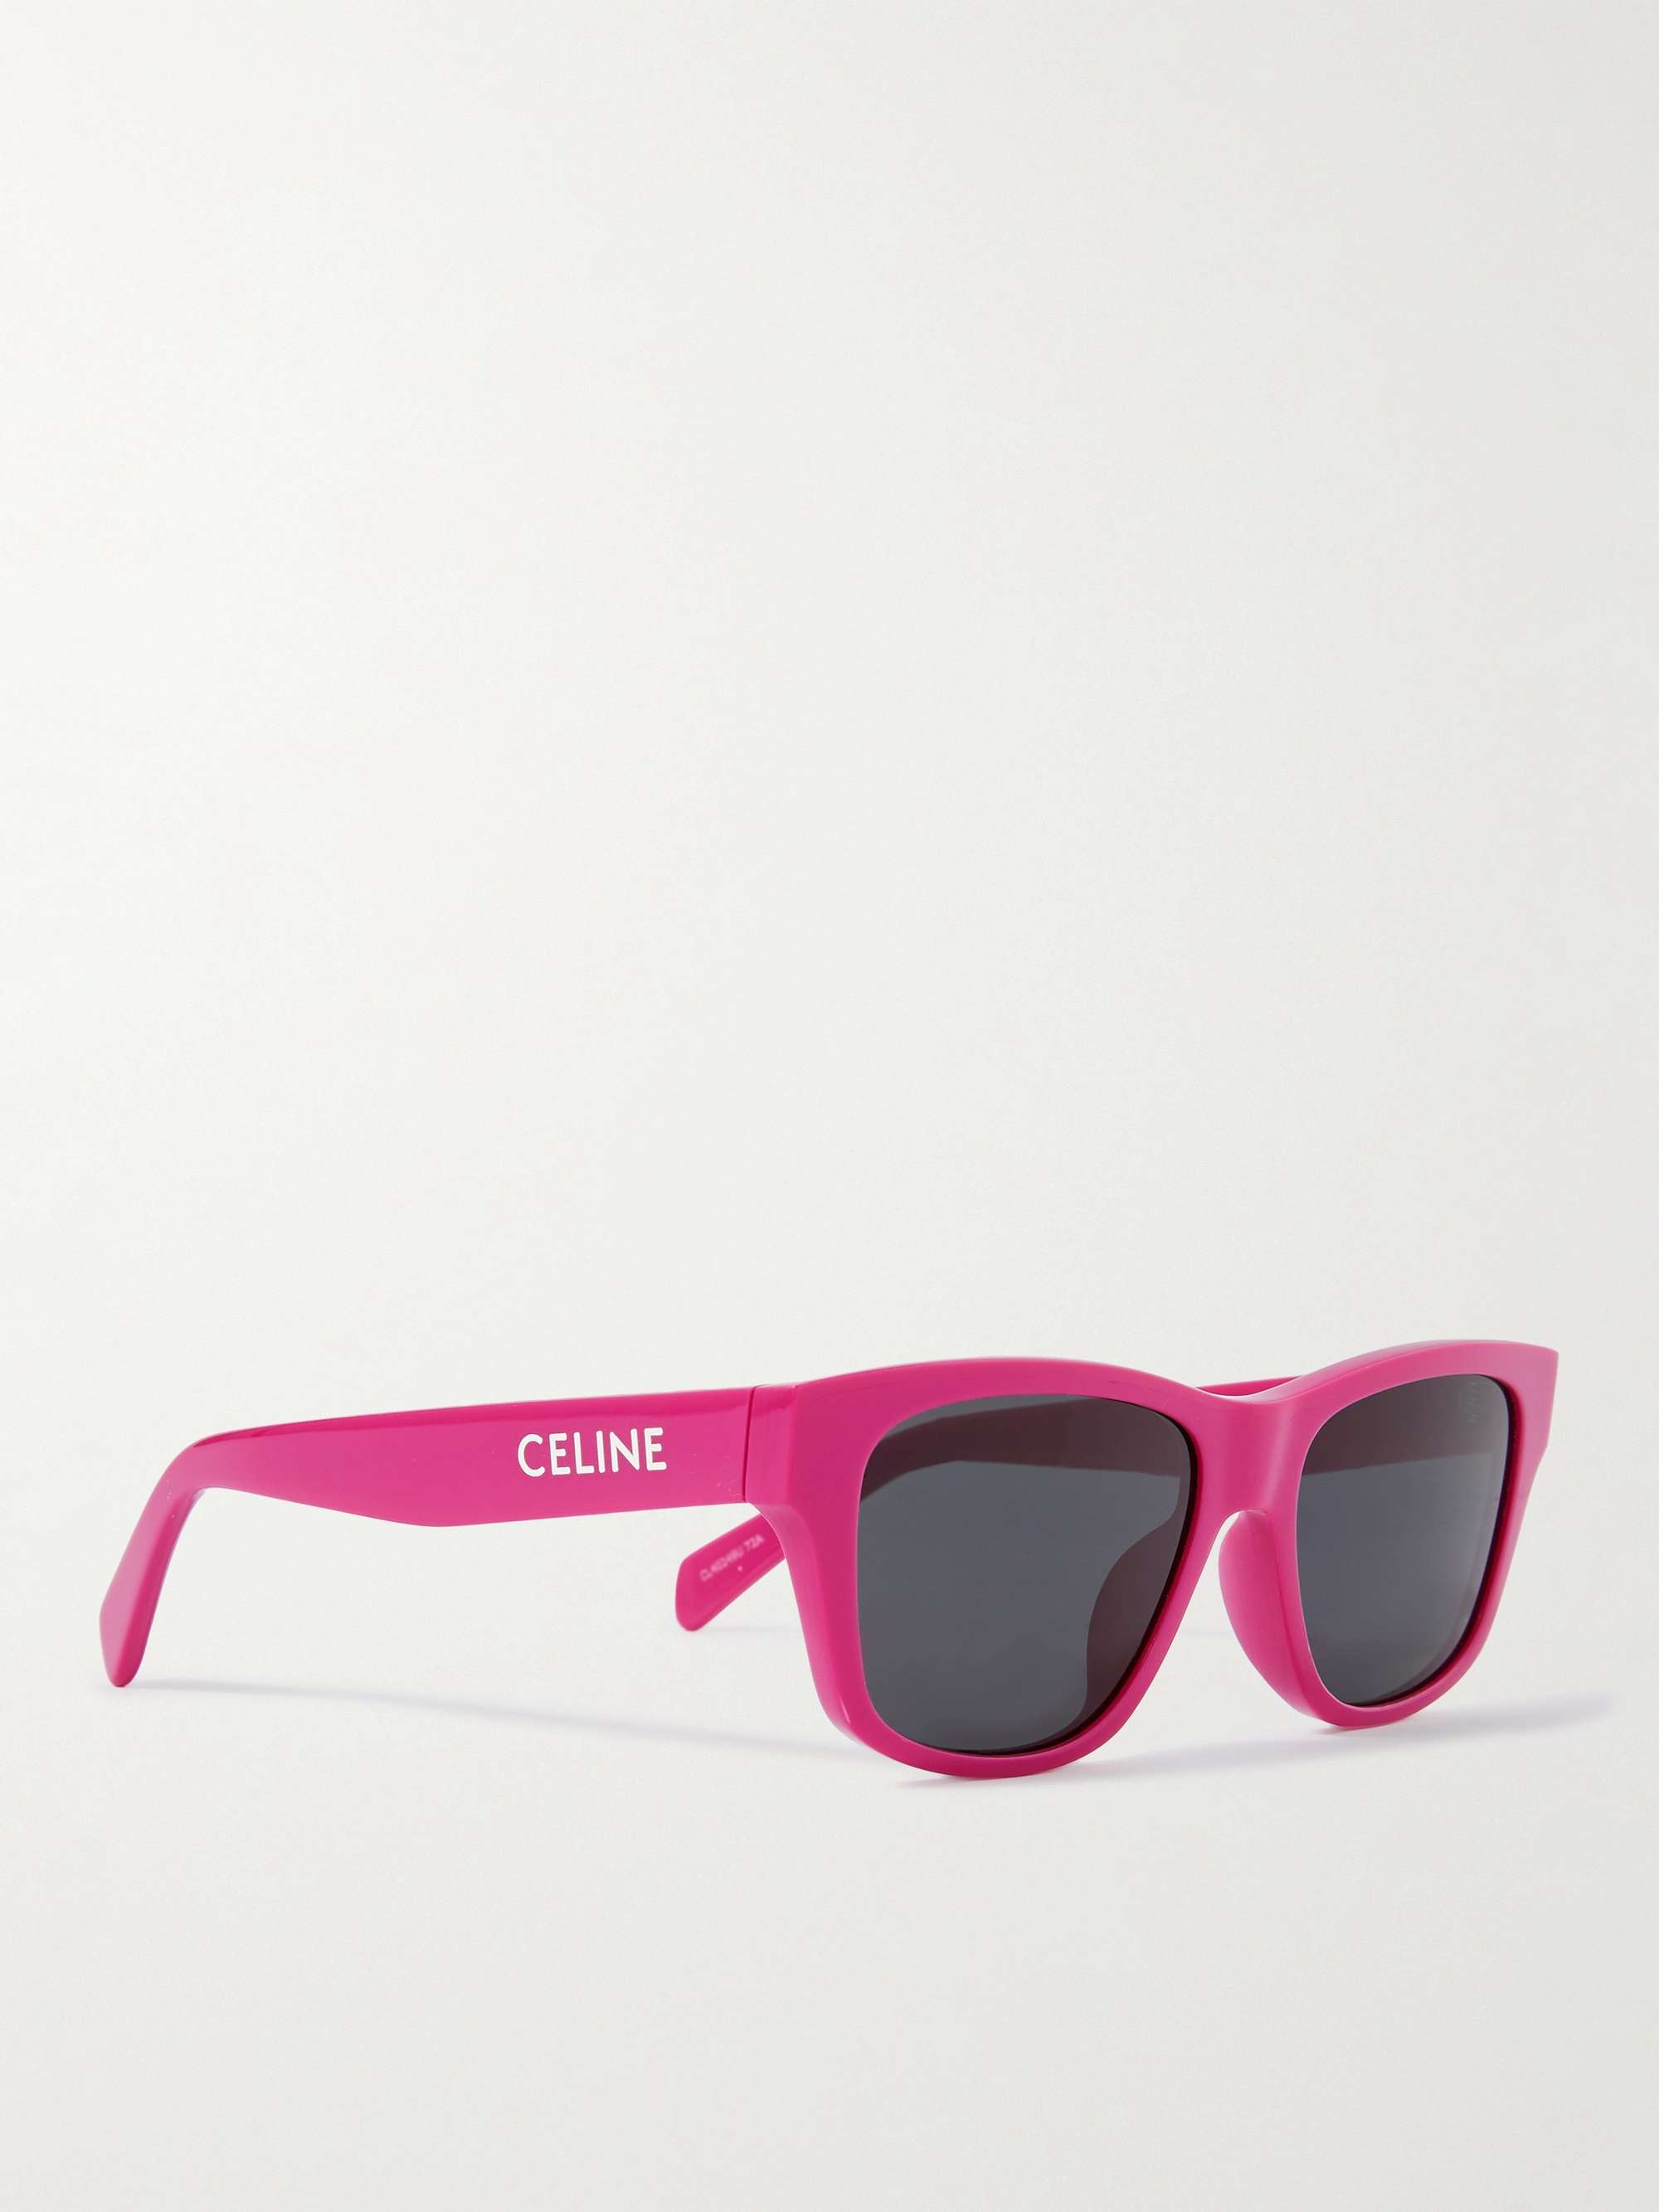 CELINE HOMME D-Frame Acetate Sunglasses